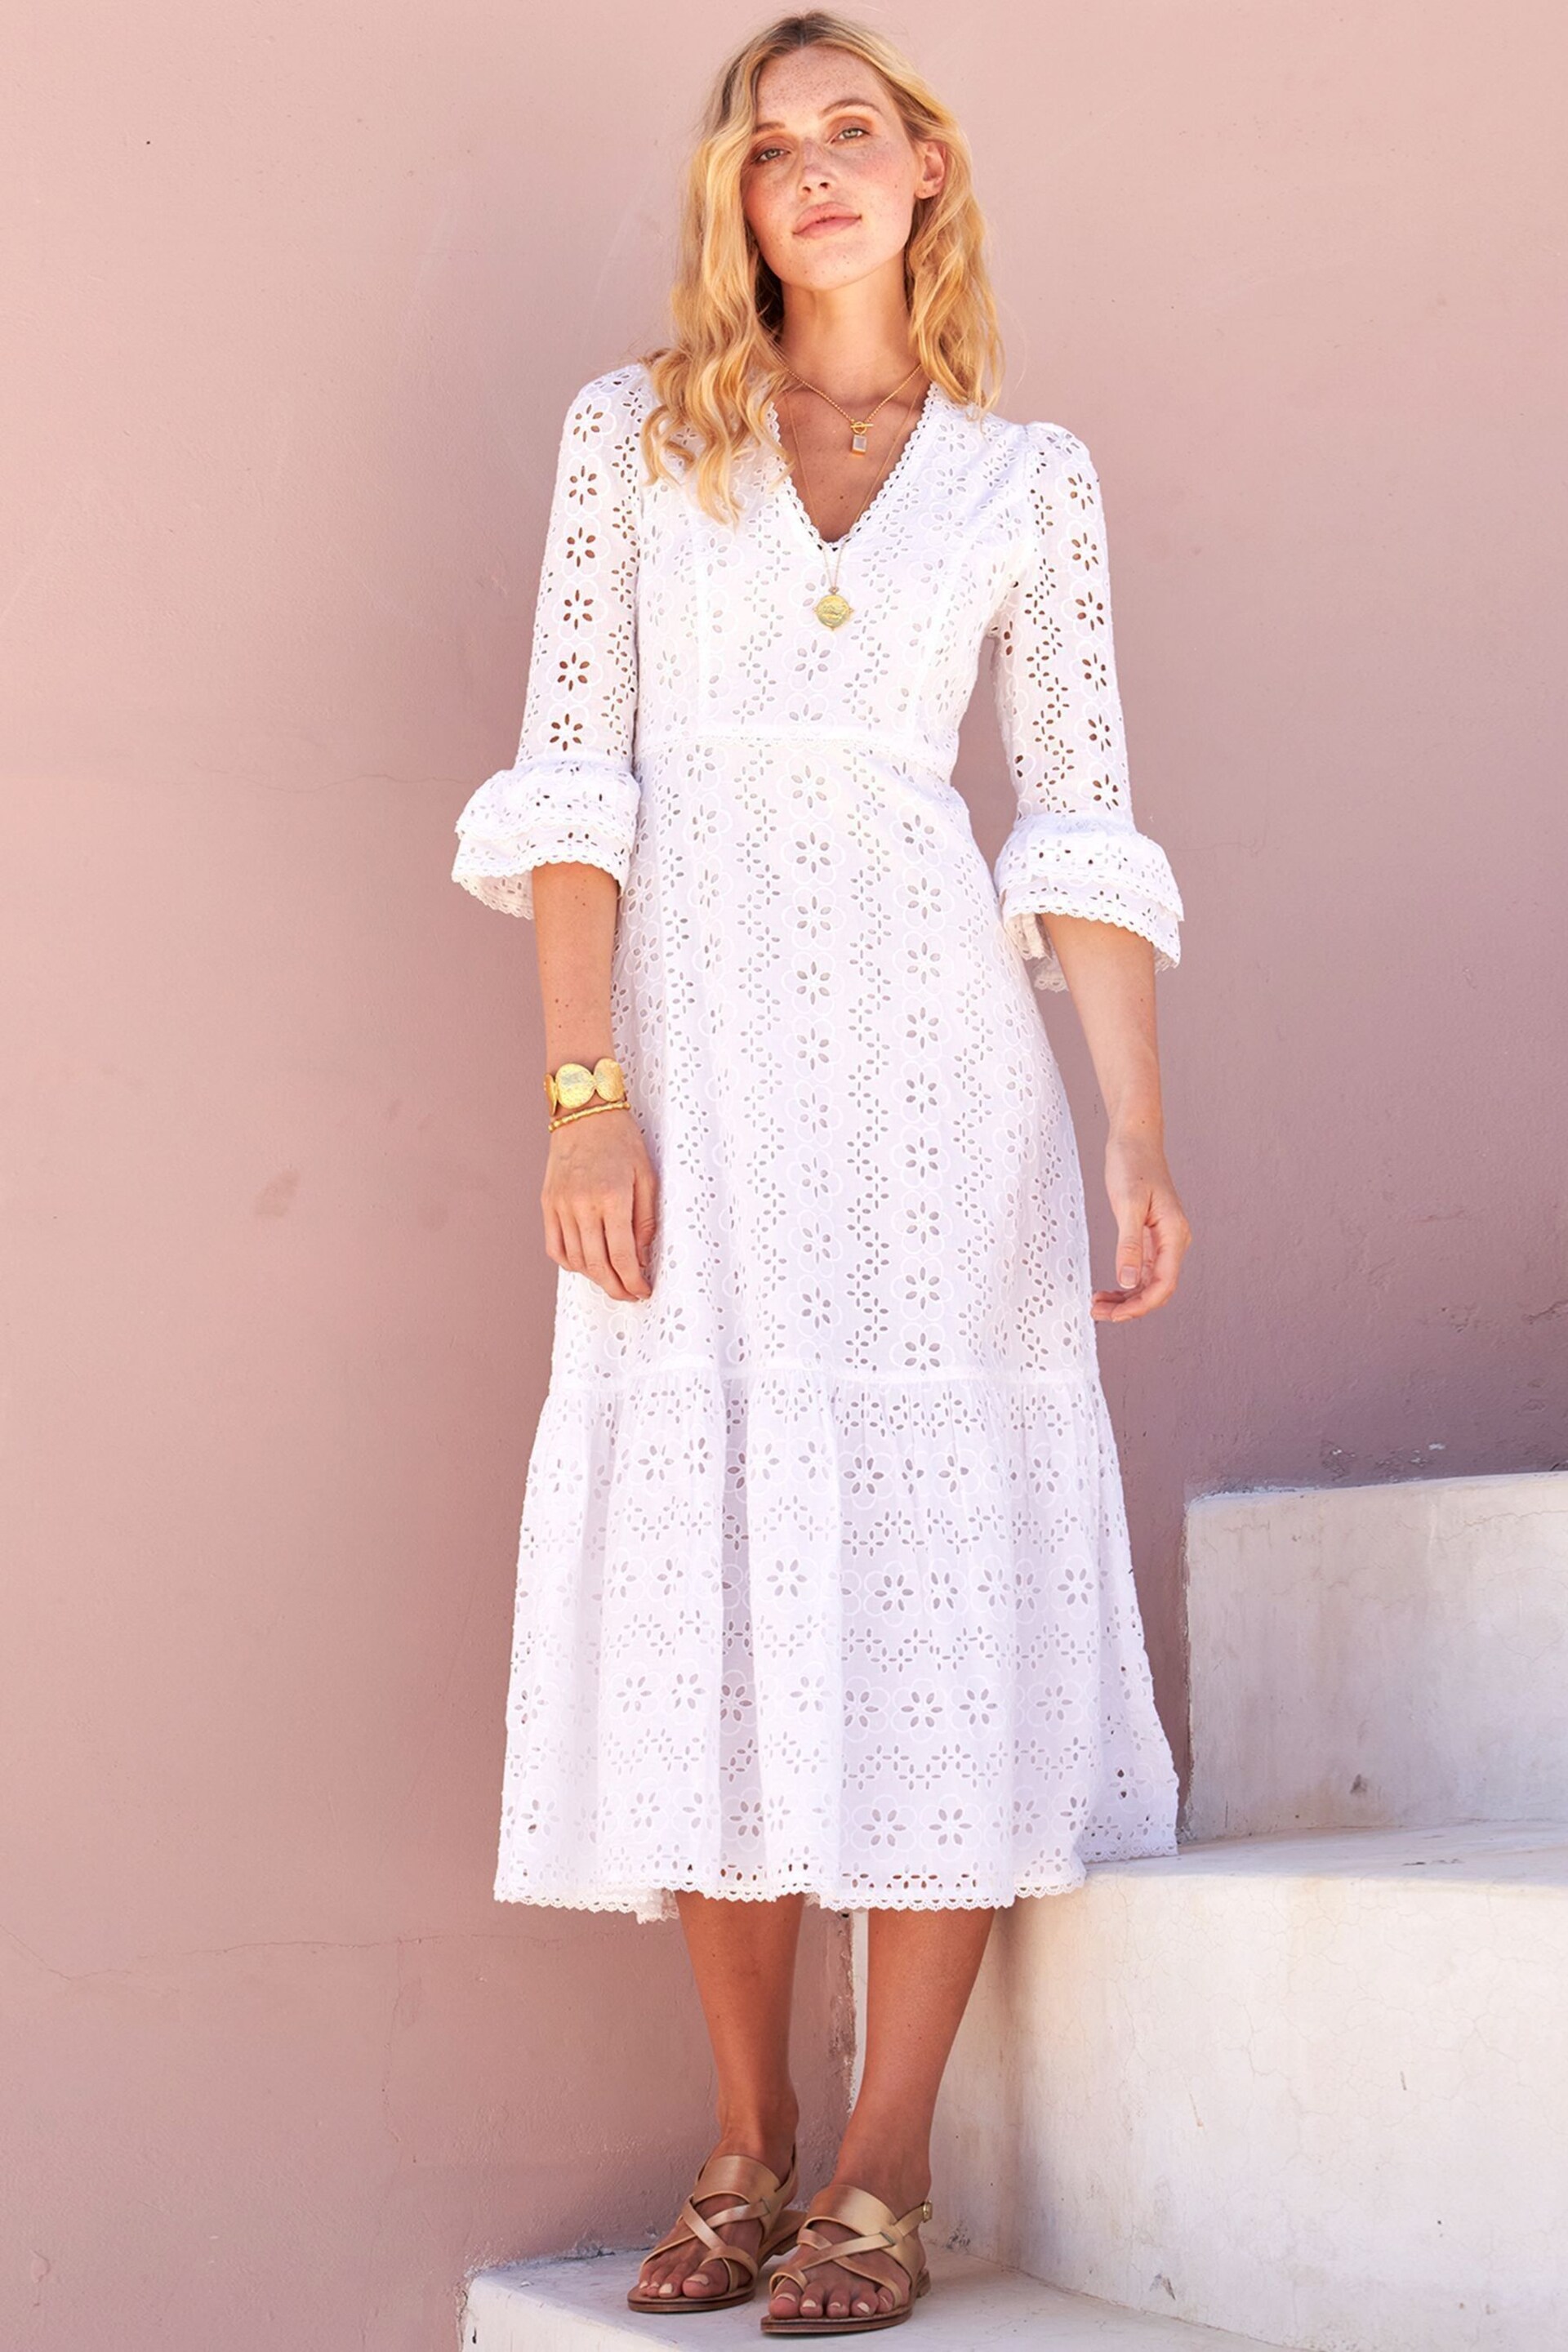 Aspiga Victoria Broderie White Dress - Image 2 of 8